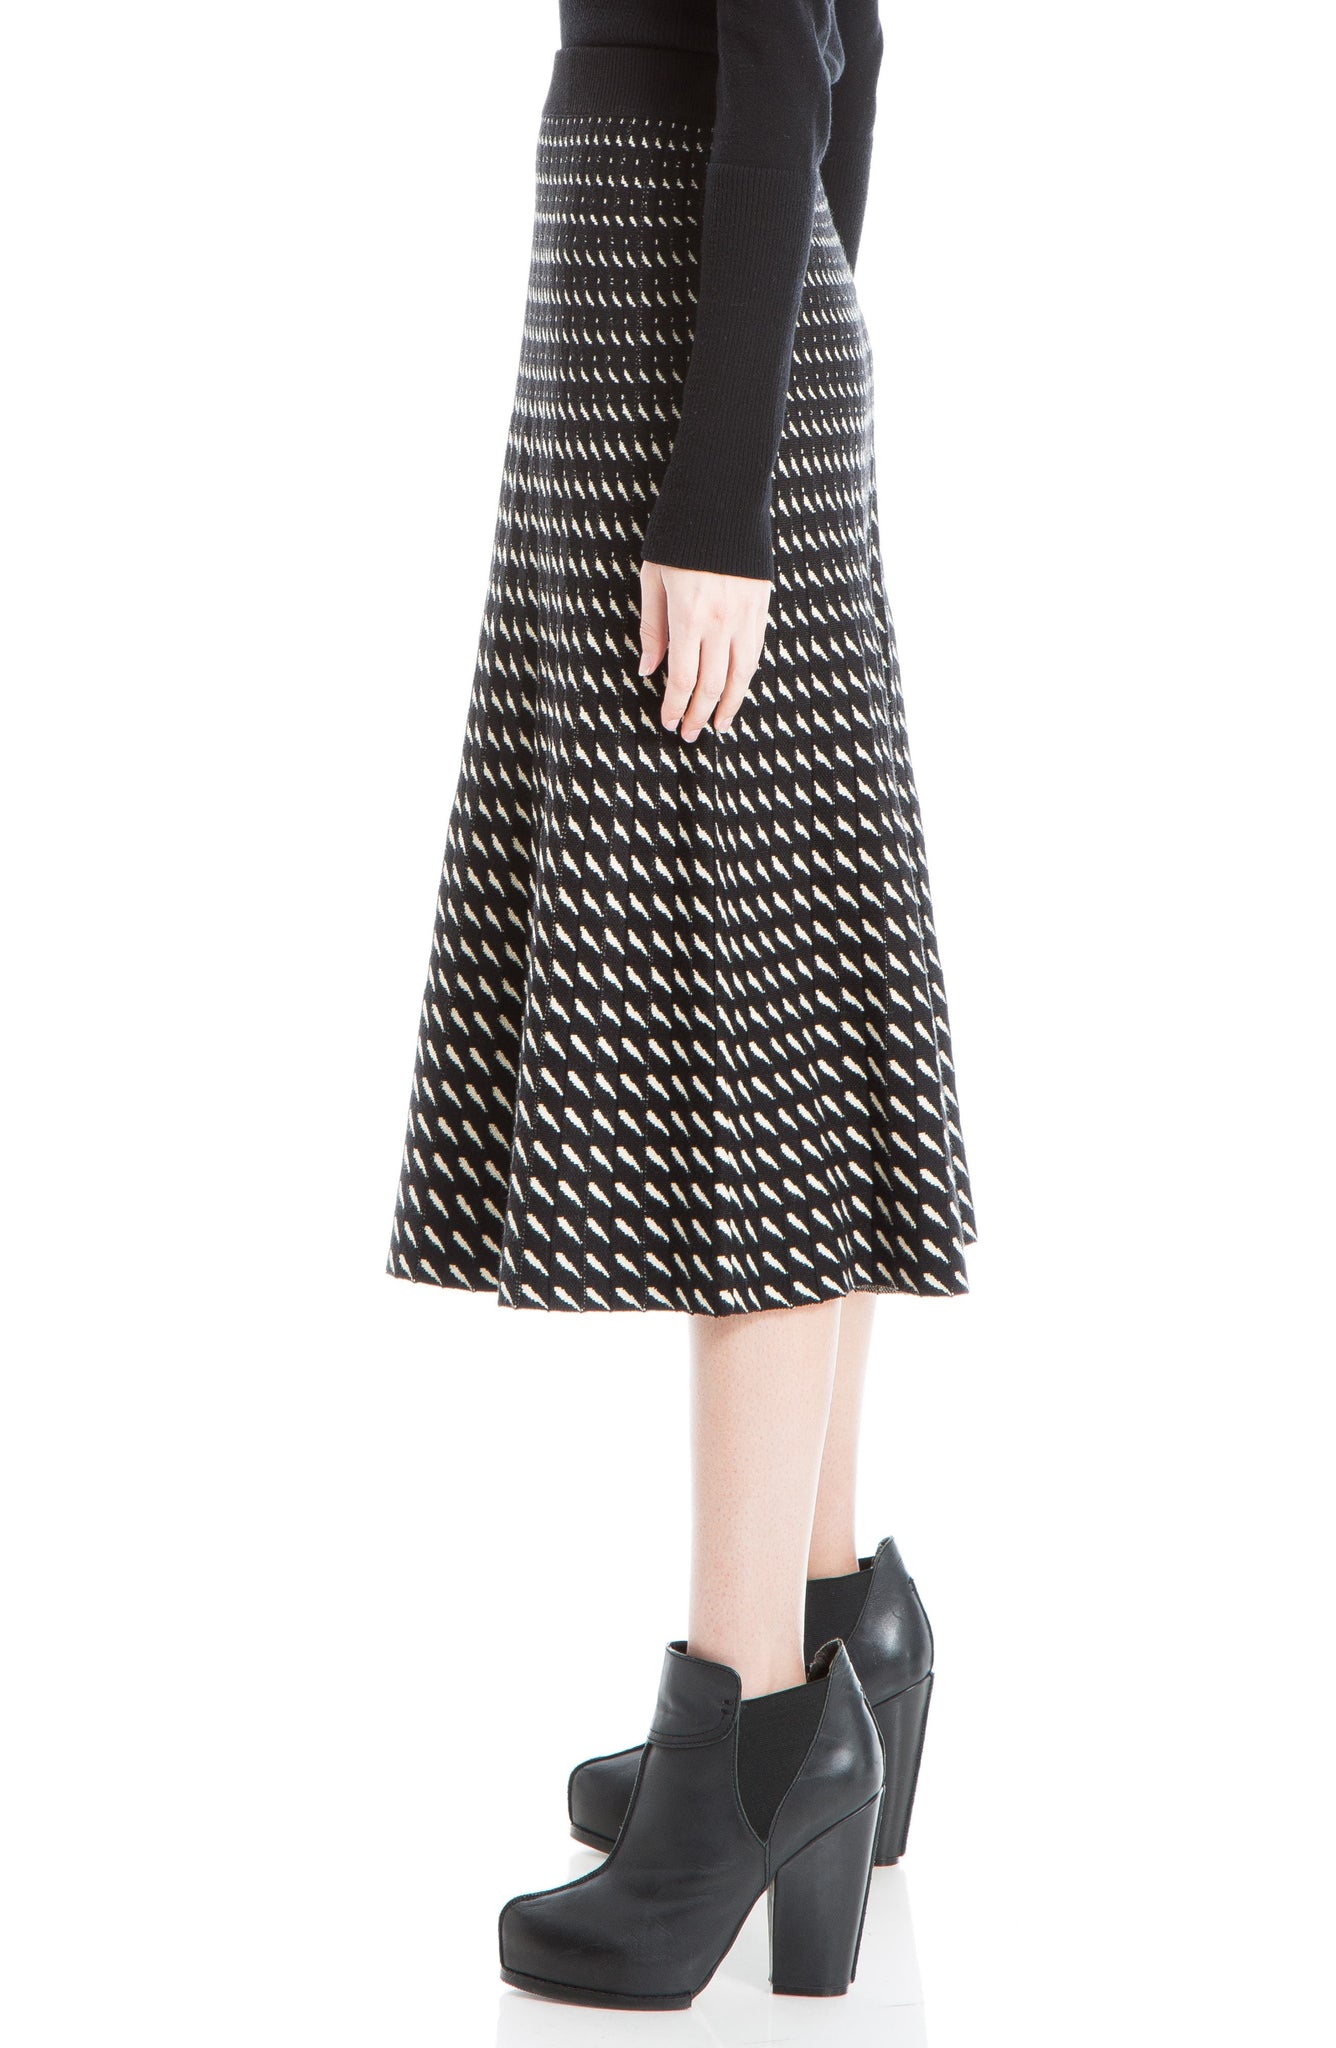 MAXSTUDIO Patterned Sweater Midi Skirt, Main, color, BLACK/ BONE RAIN STRIPE